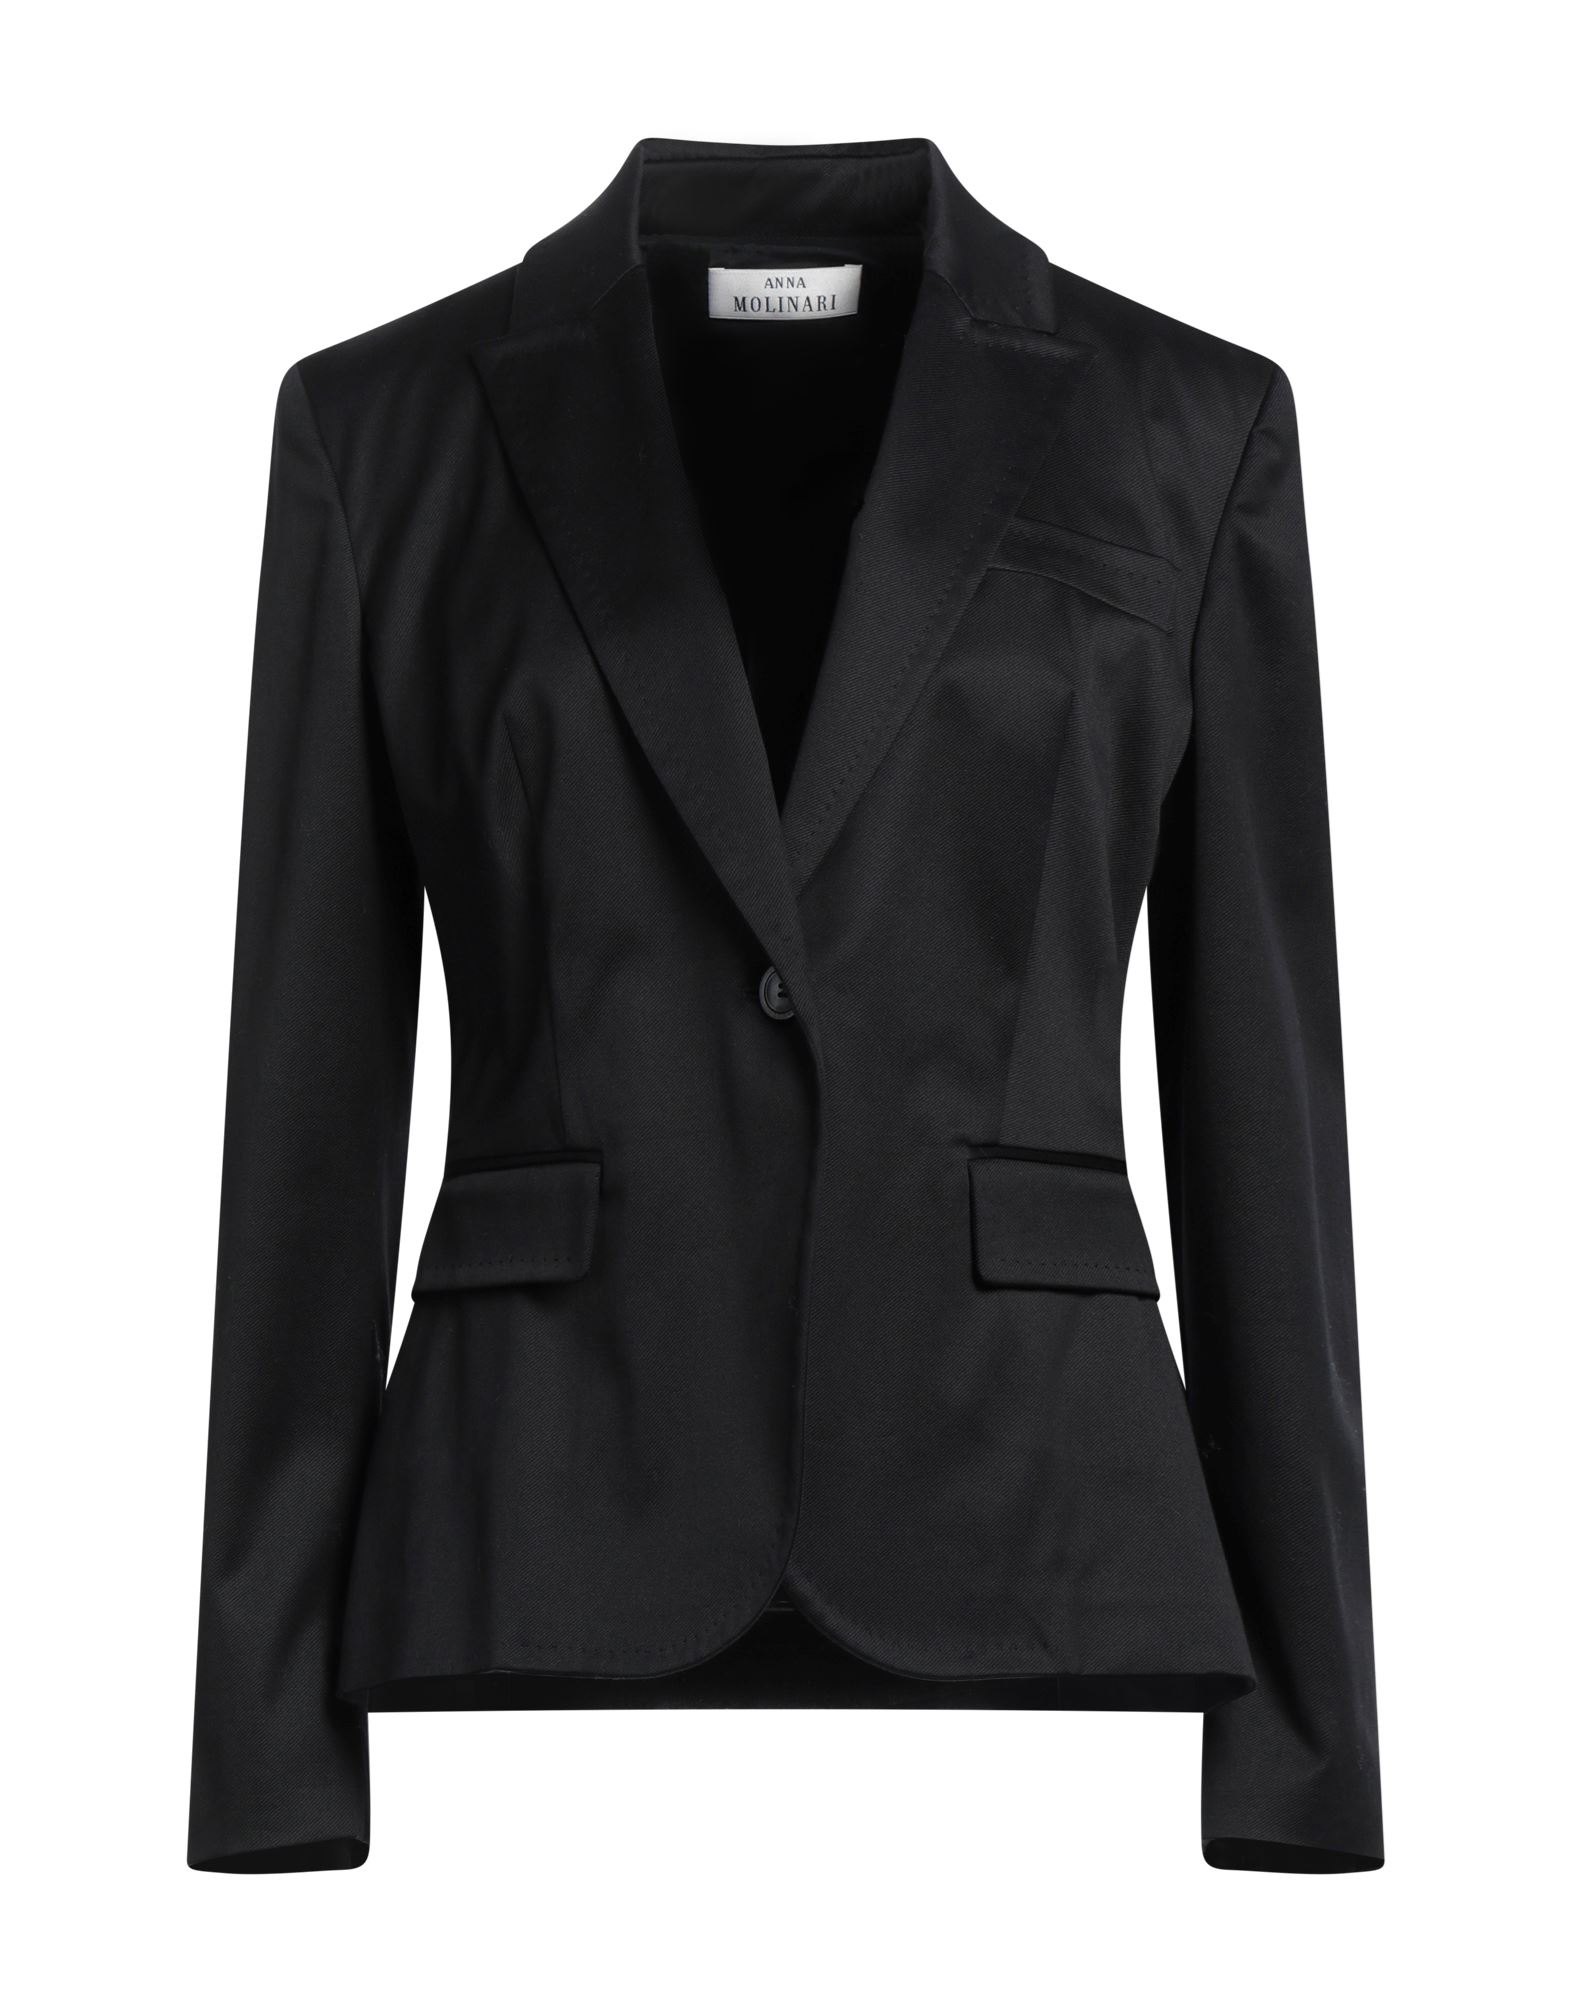 ANNA MOLINARI Suit jackets